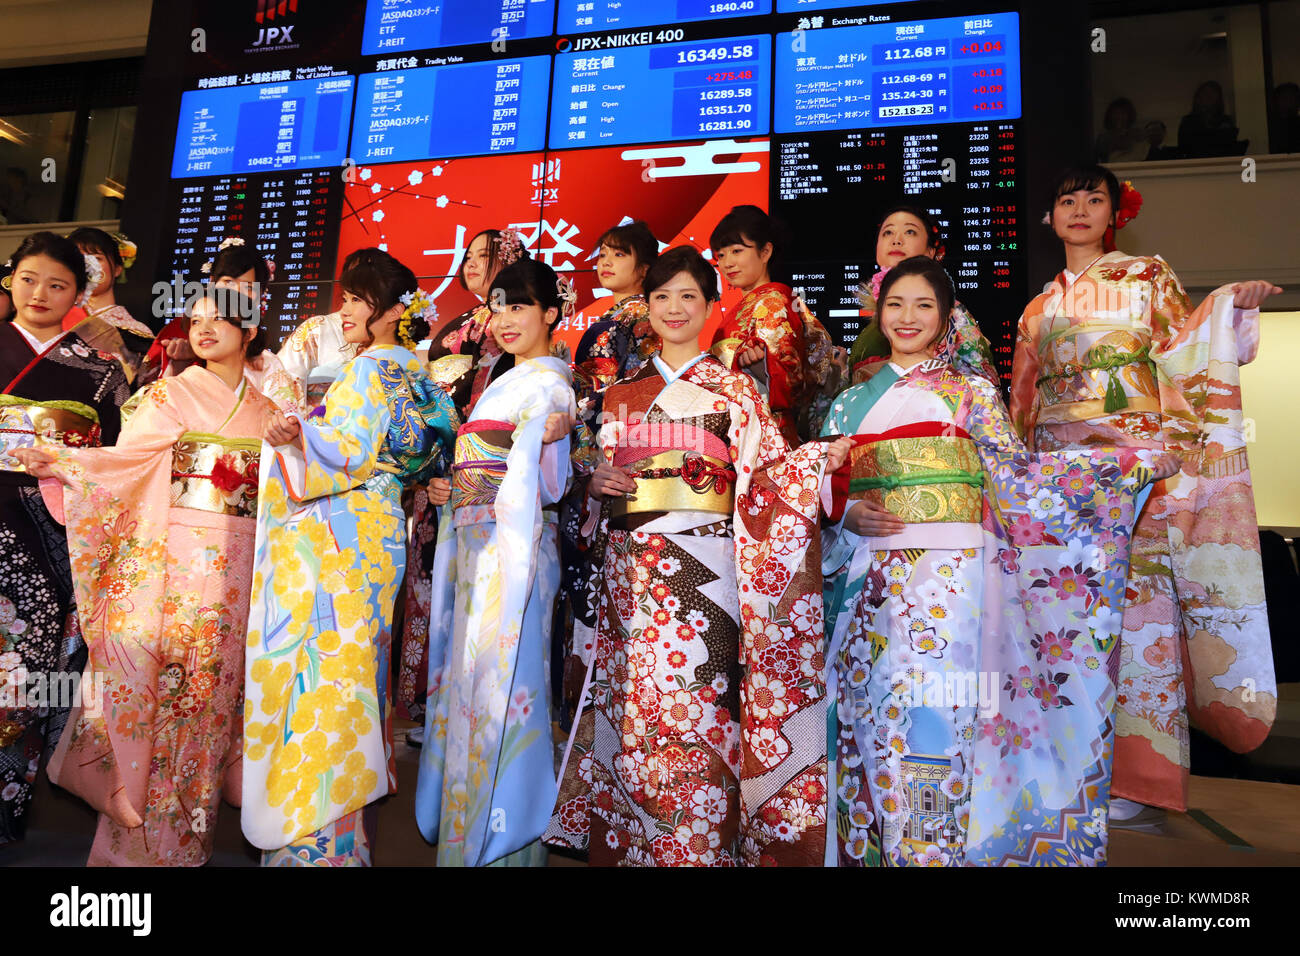 Kimono stock photo hi-res stock photography and images - Alamy